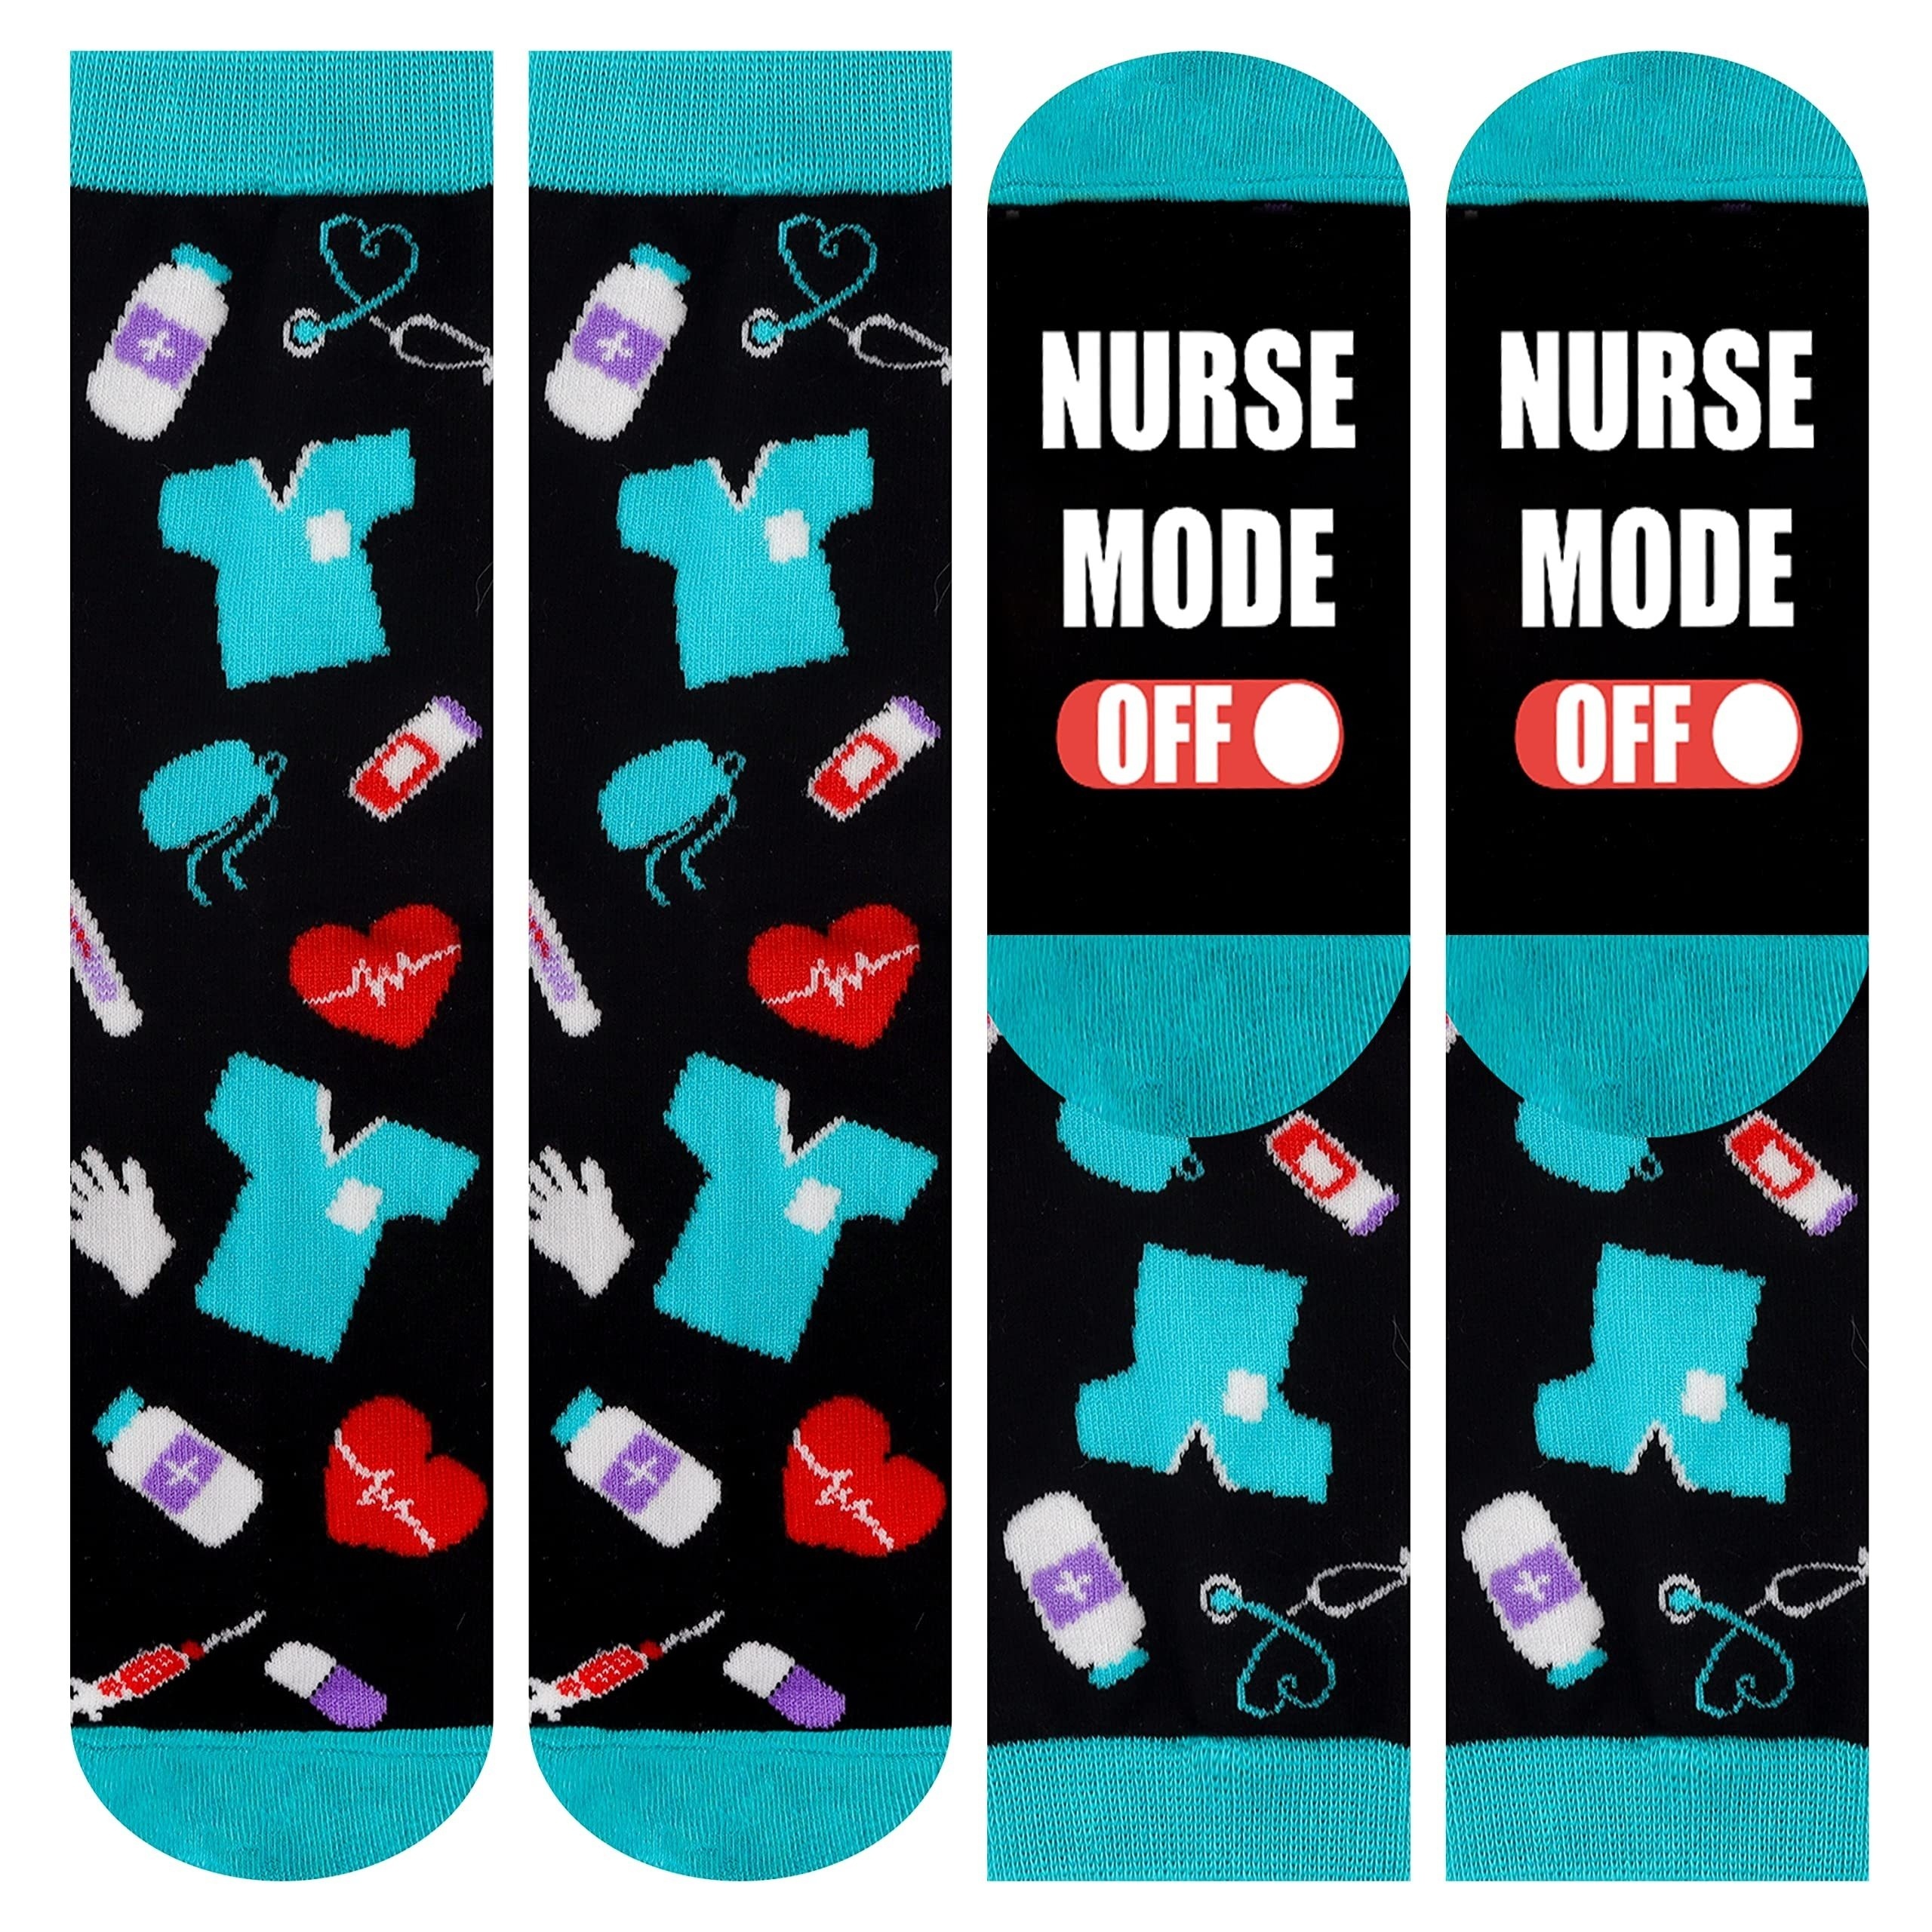 89 idee su Gadgets infermieristici  scarpe infermiere, gioielli di cuore,  calzini pazzi